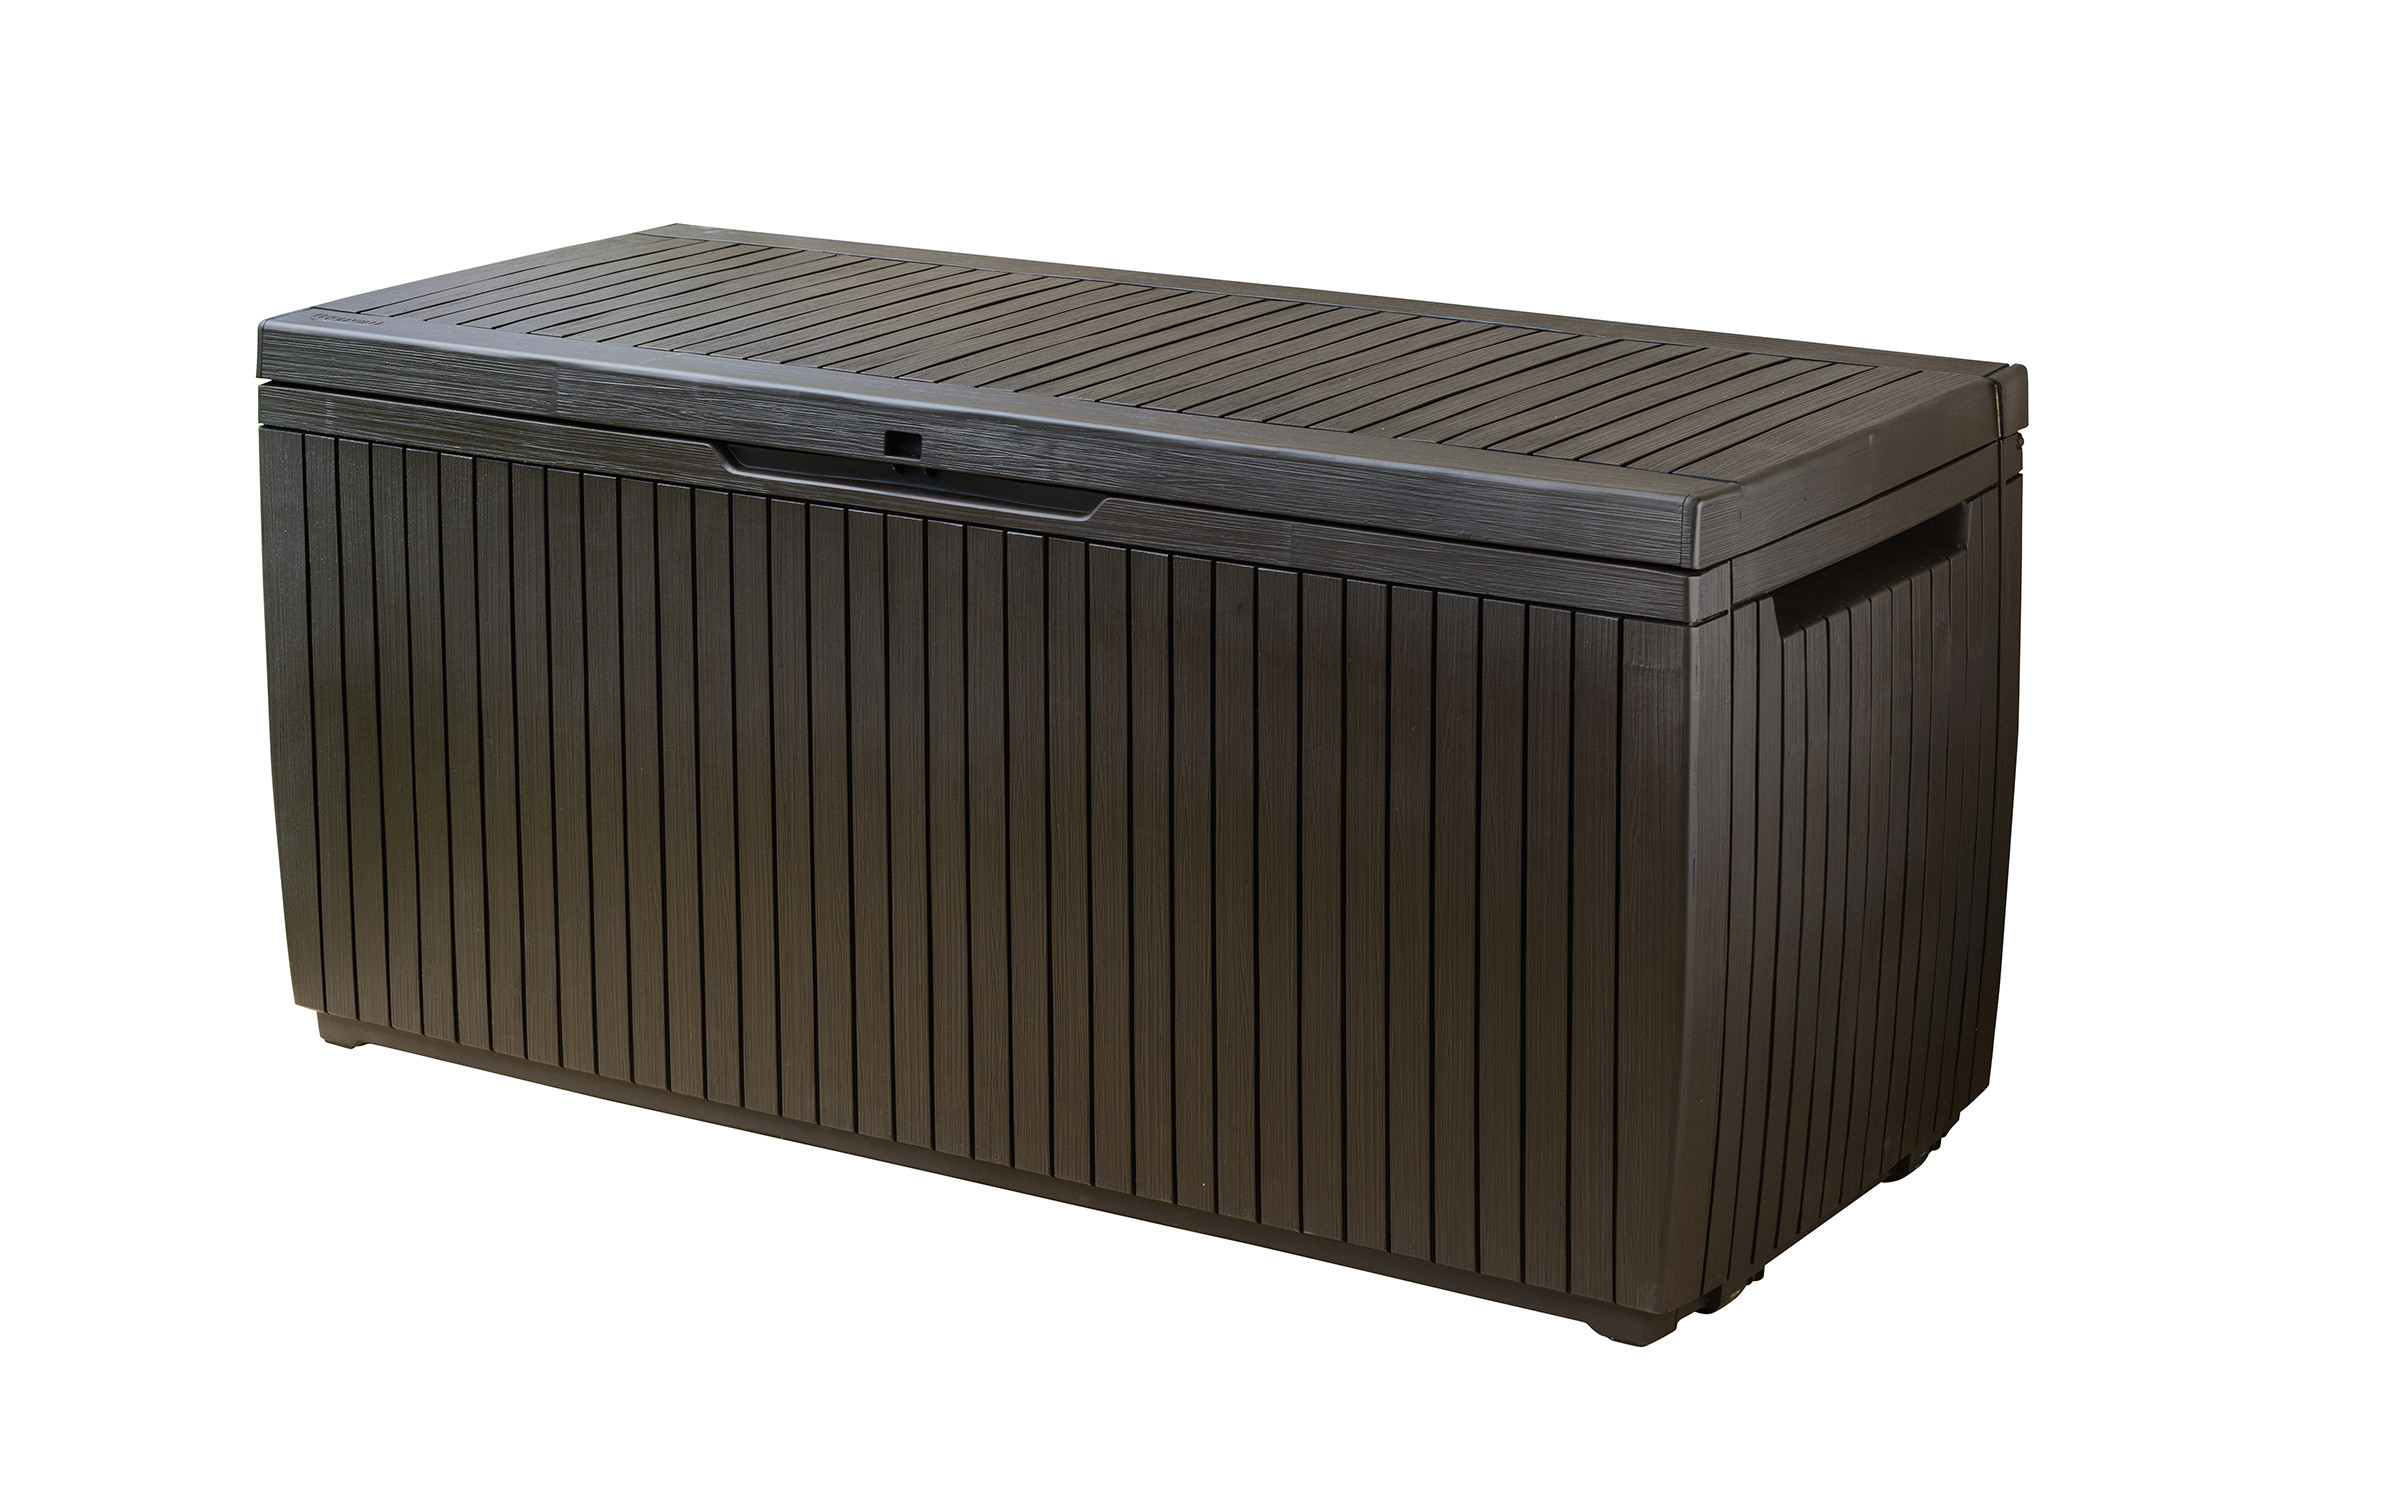 Resin Patio Storage Bench
 Keter Springwood 80 Gallon Plastic Deck Box Resin Patio